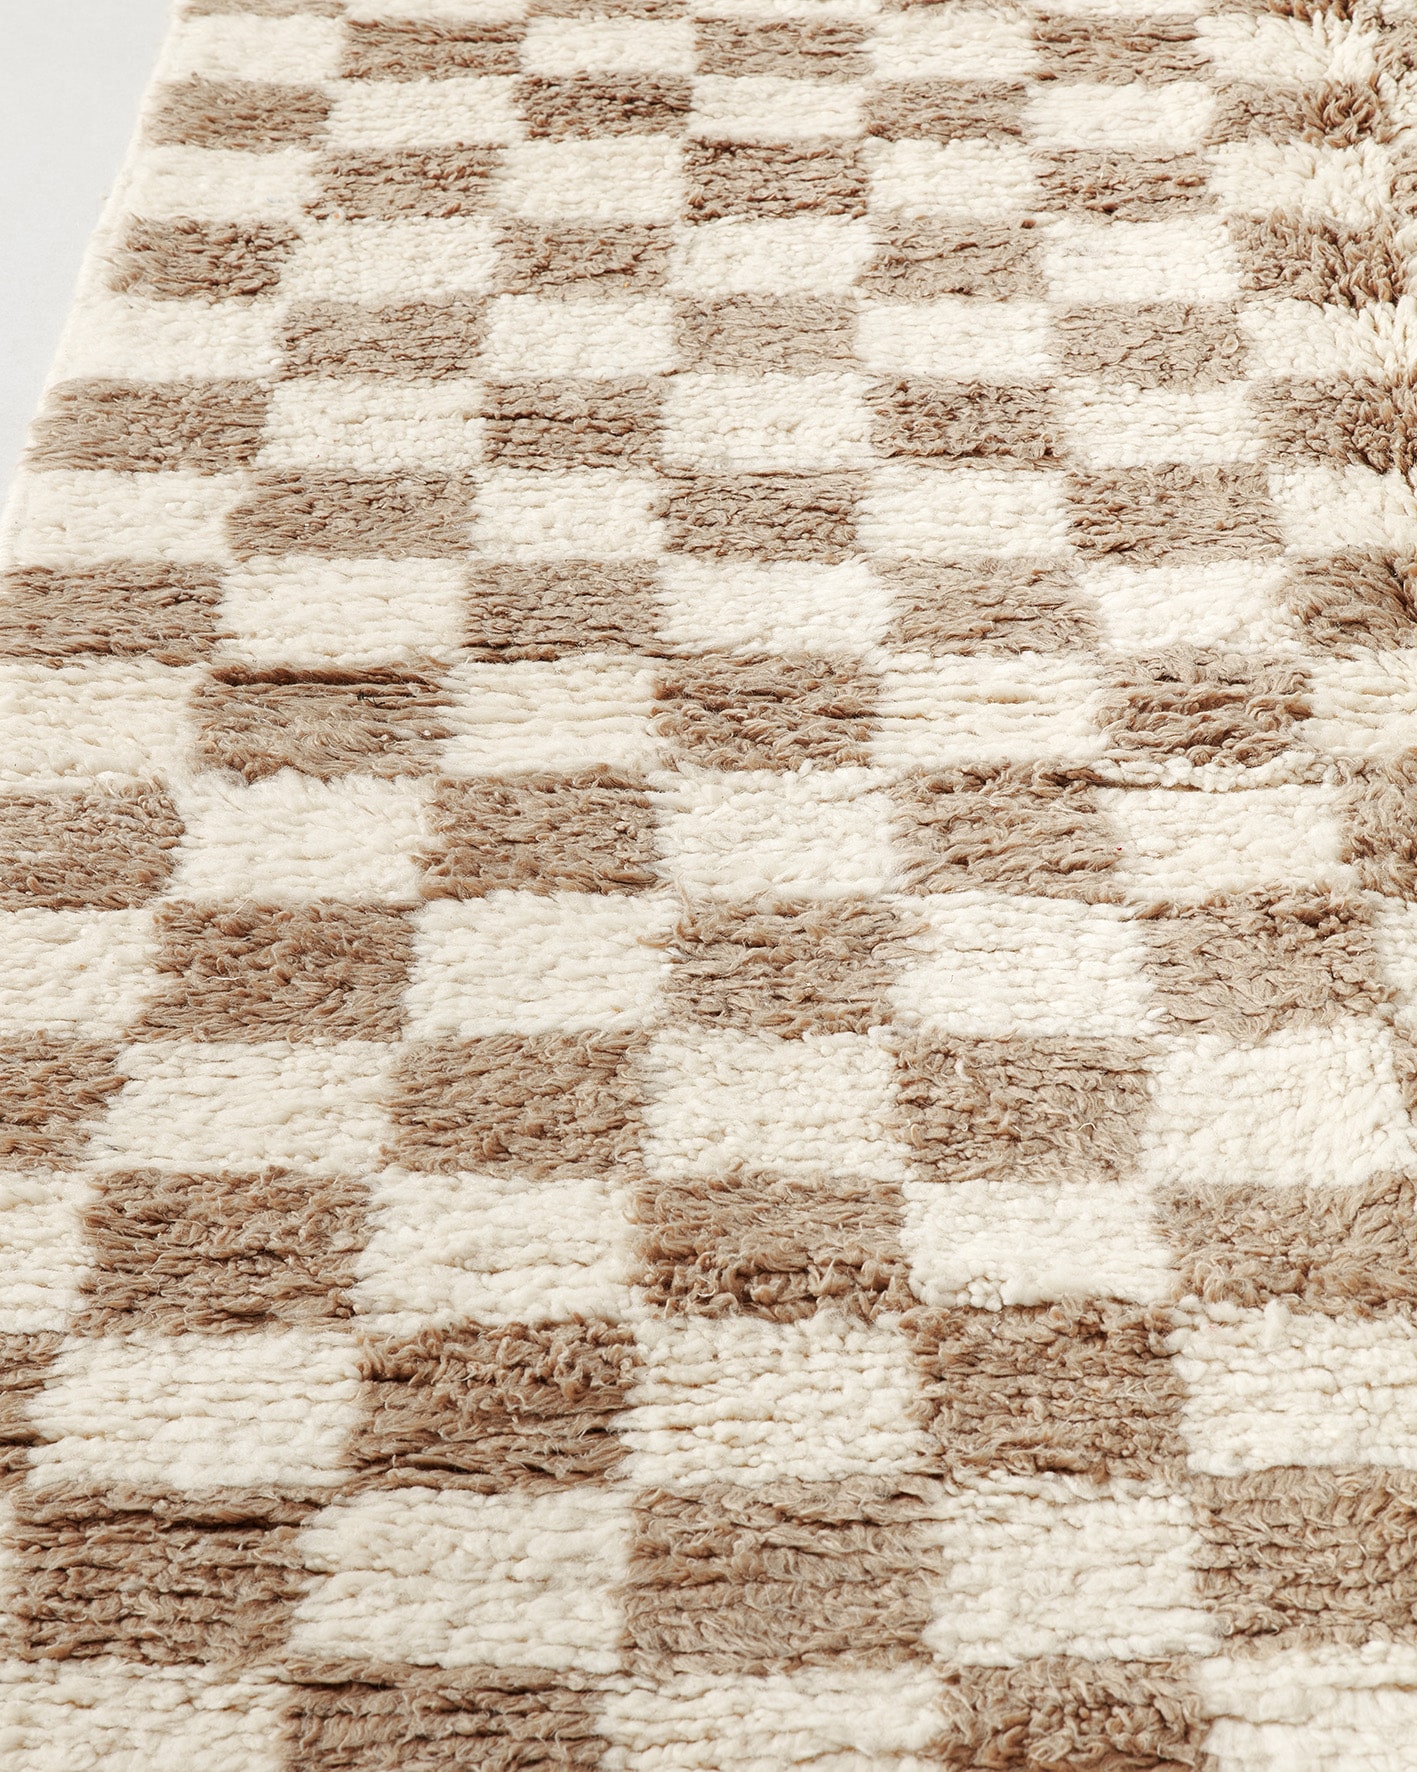 Light brown checkered rug, close